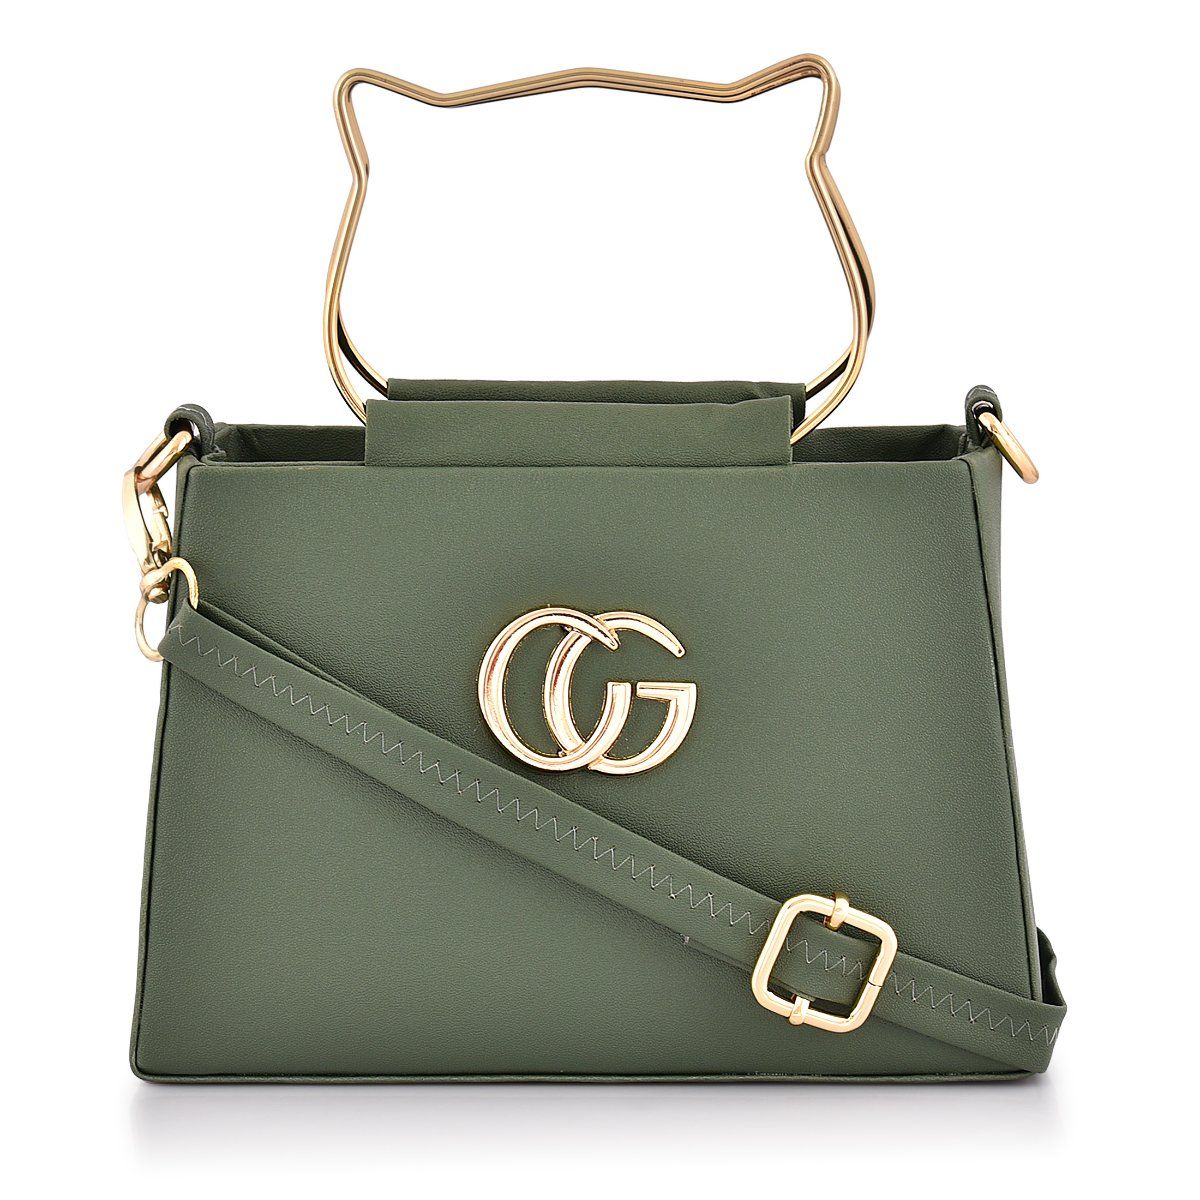 Gucci Women's Soho Small Leather Embossed Disco Crossbody Handbag Black :  Amazon.in: Shoes & Handbags